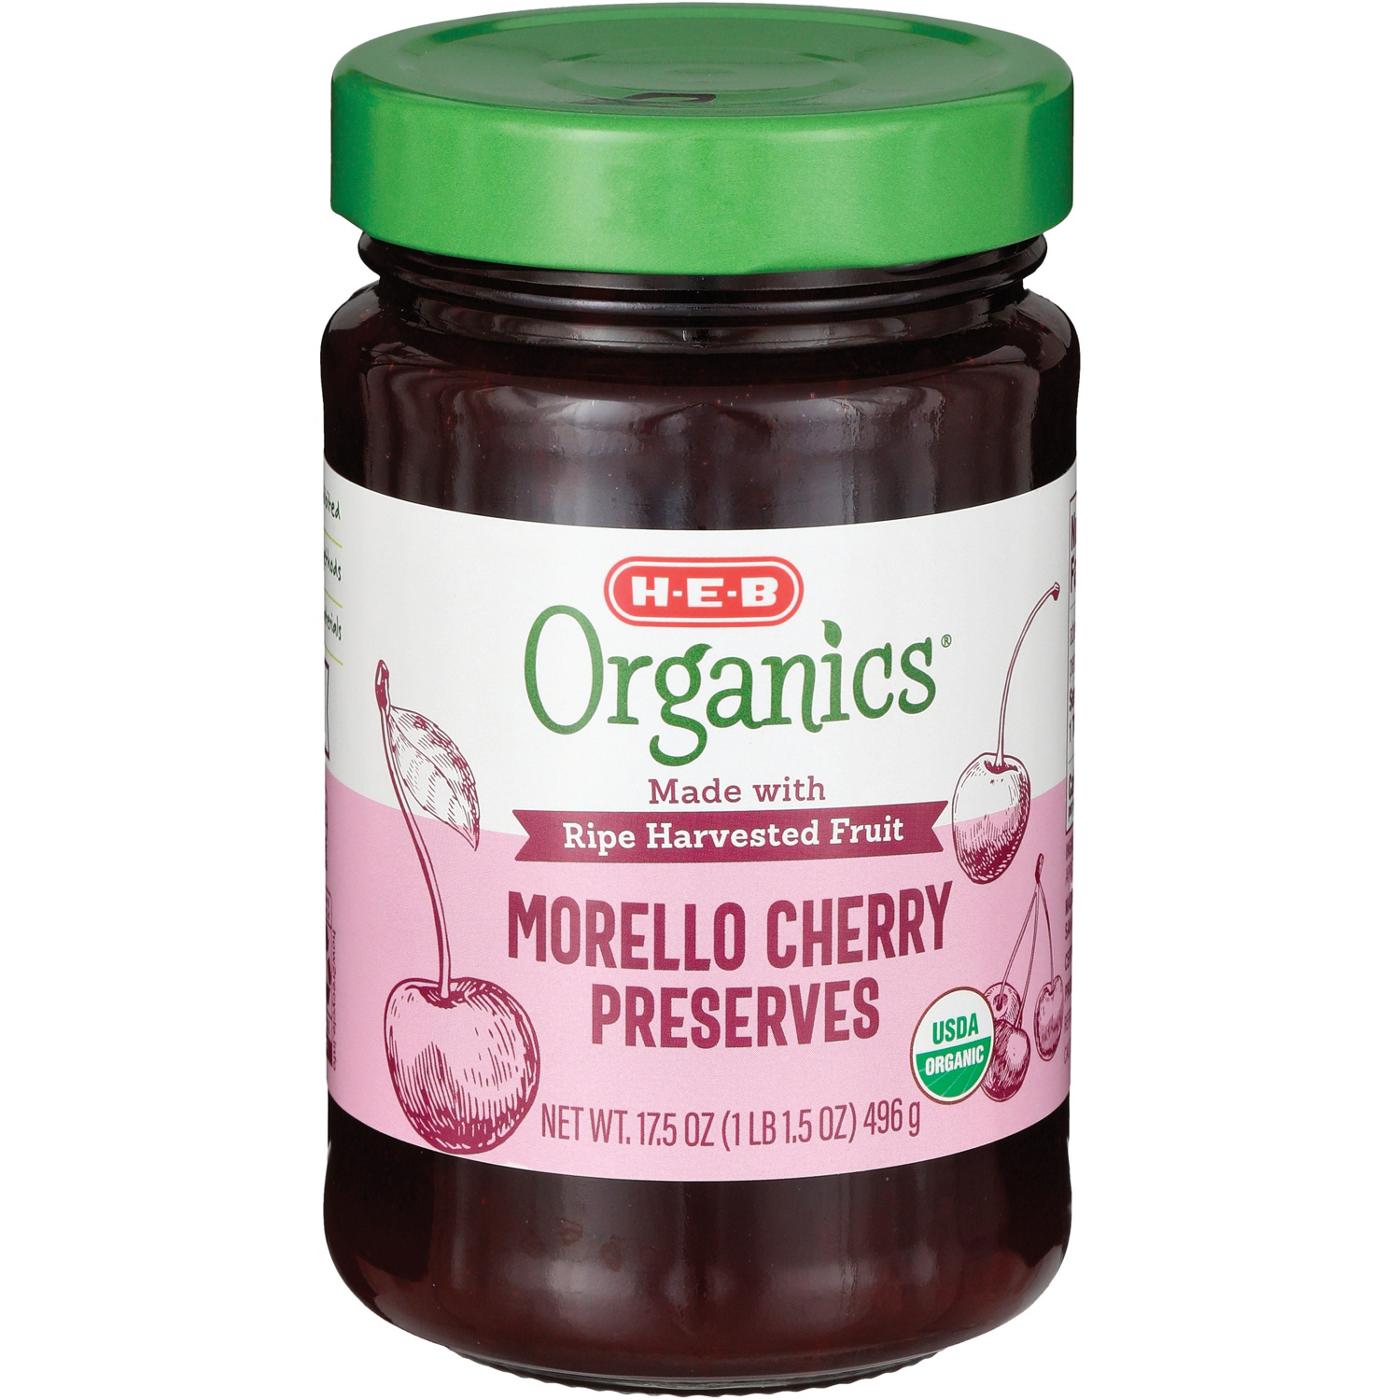 H-E-B Organics Morello Cherry Preserves; image 2 of 2